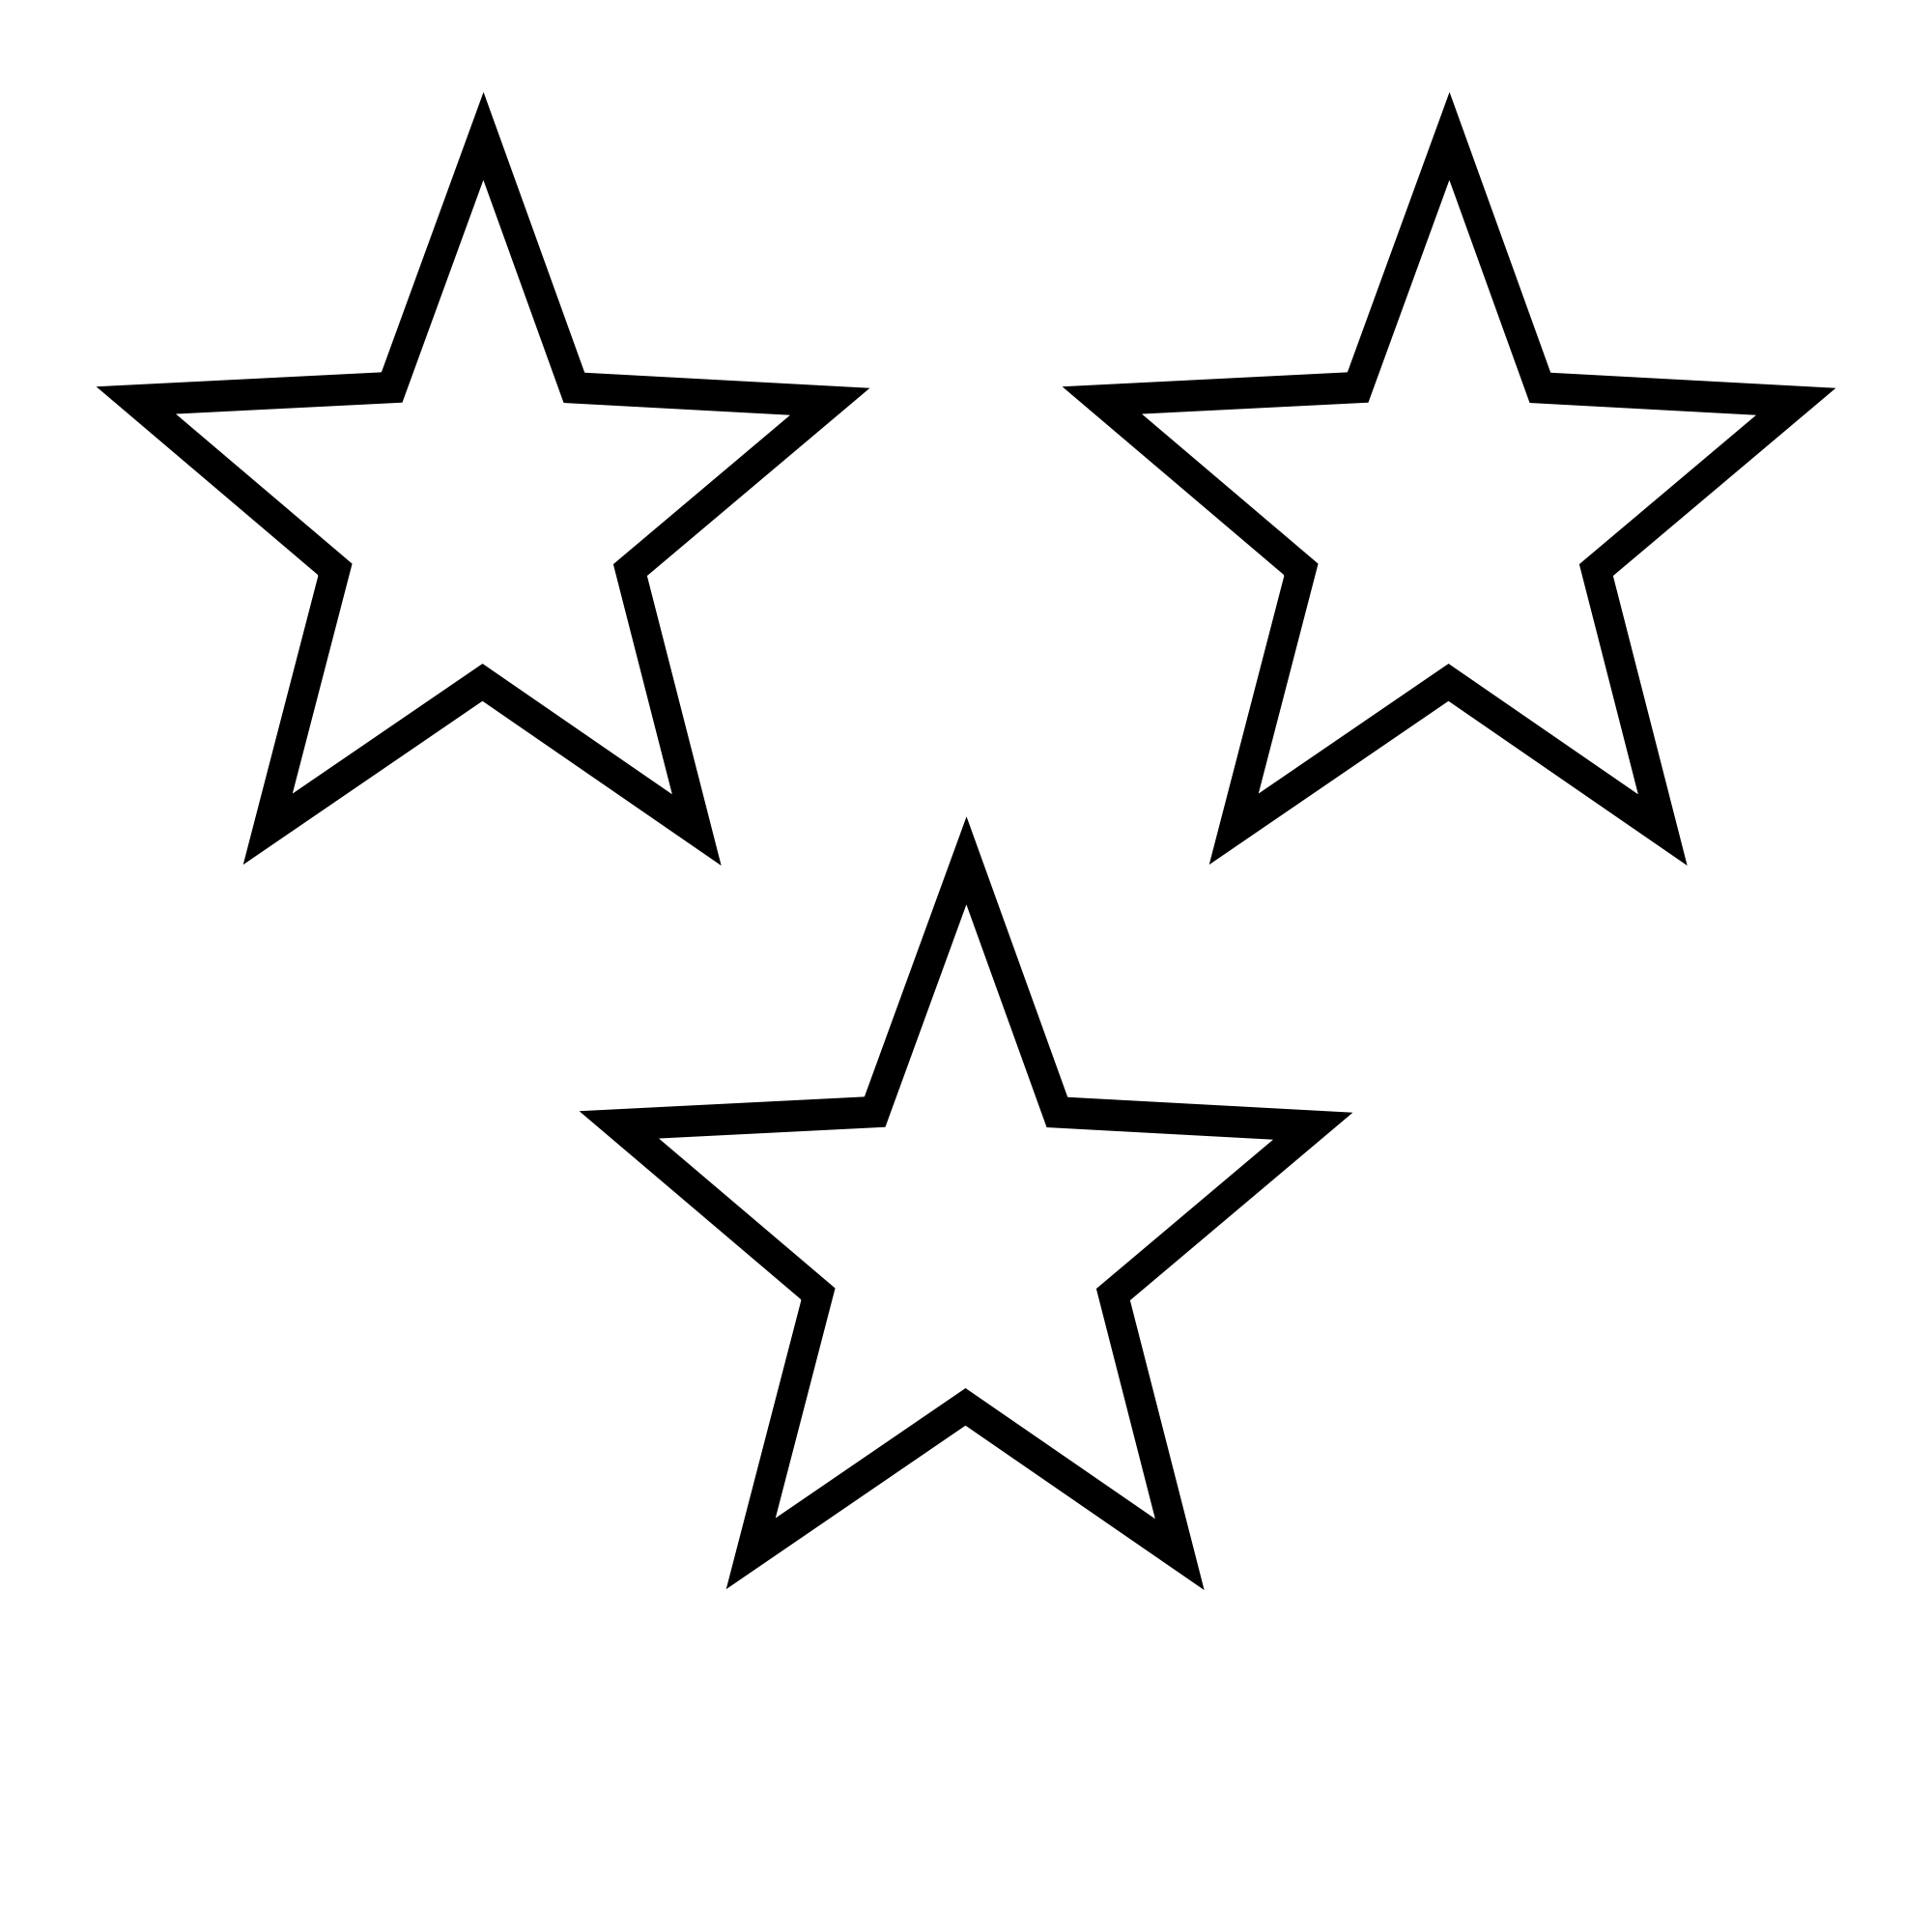 File:White Stars 3 - Wikimedia Commons